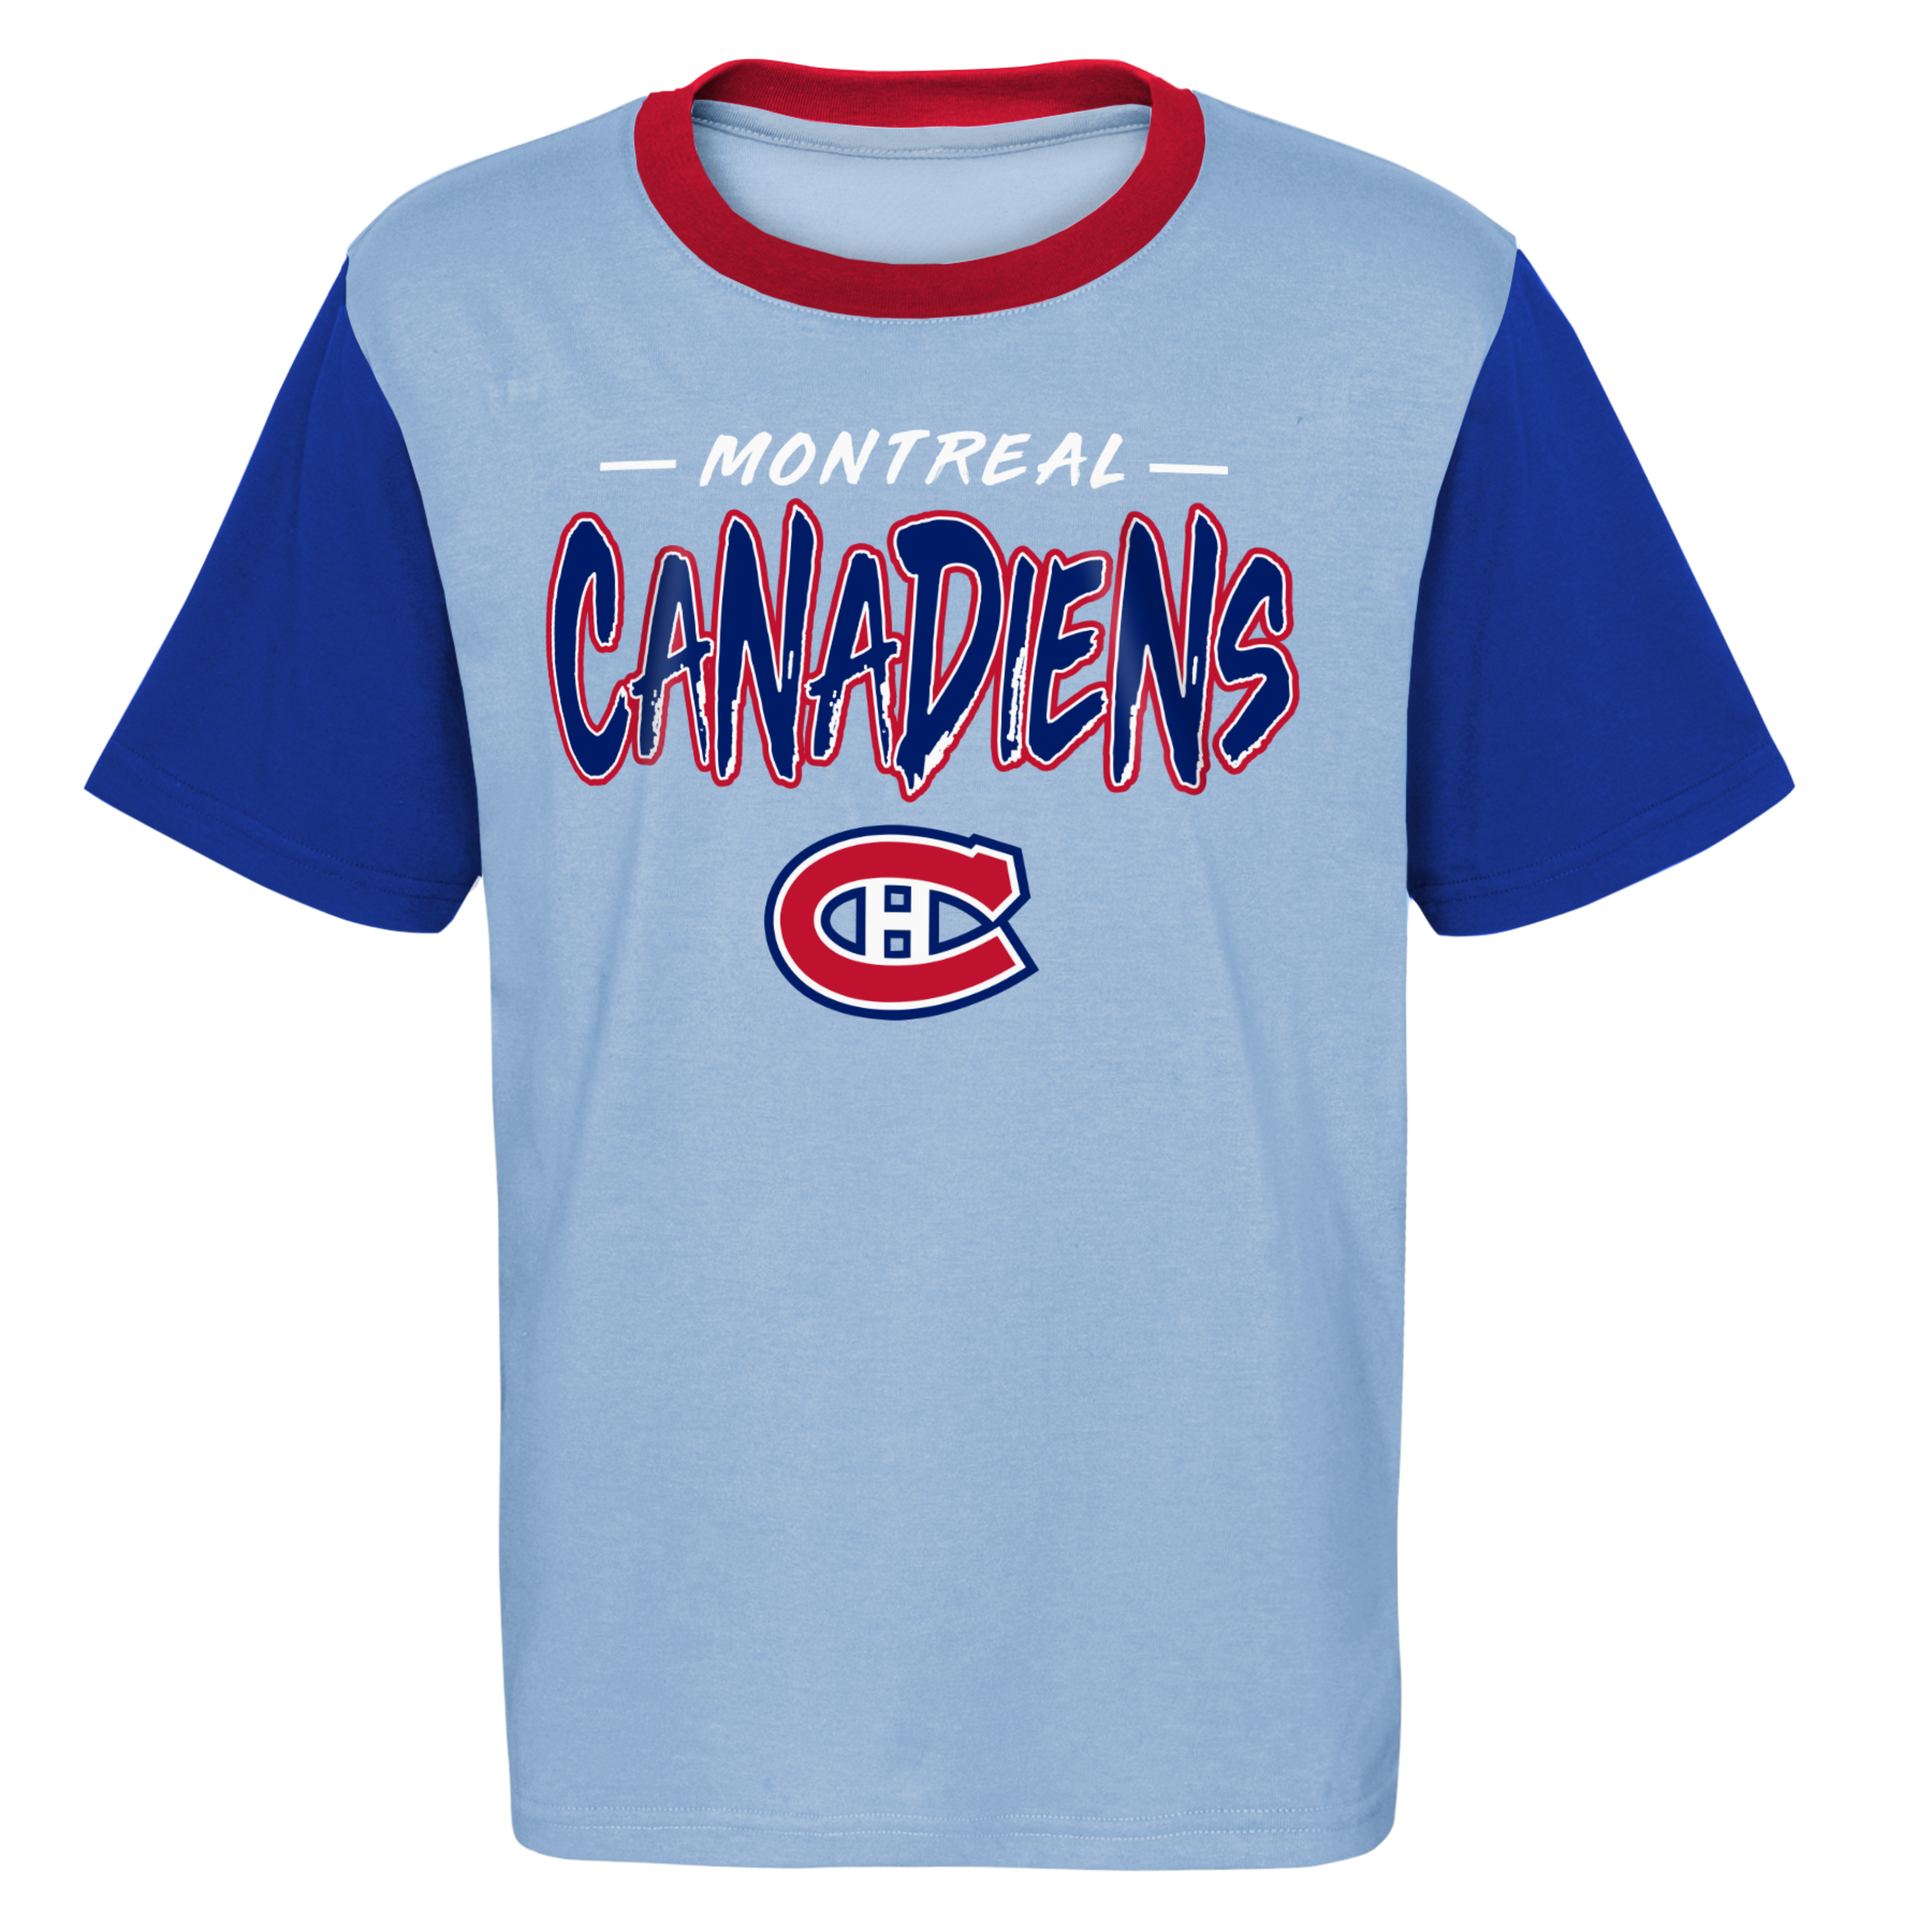 Montreal Canadiens T-Shirts, Canadiens Shirts, Canadiens Tees